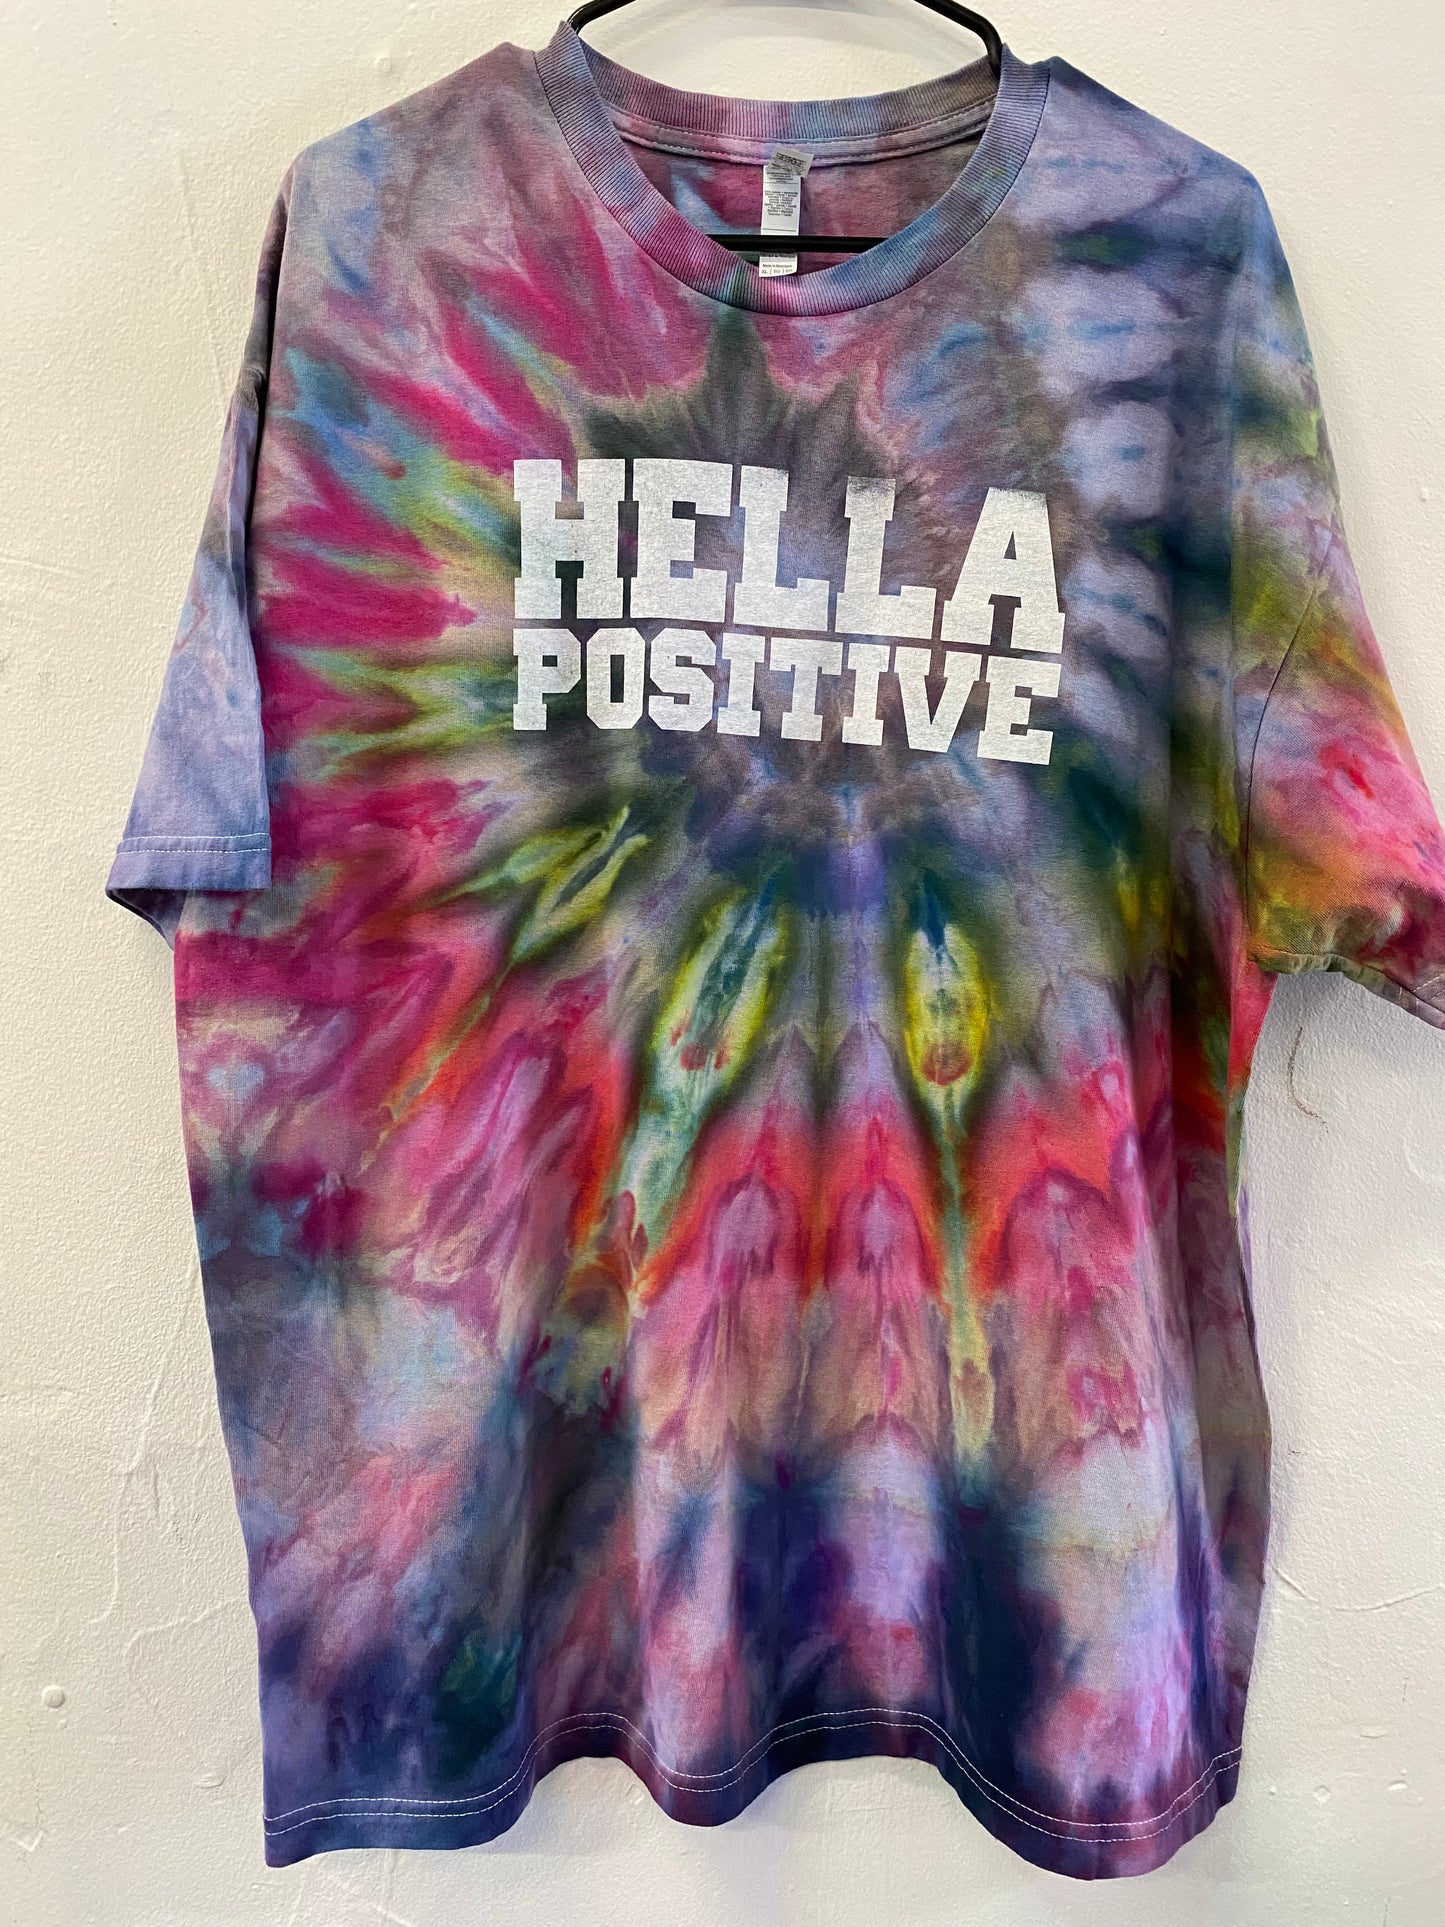 Hella Positive Tie Dye T shirt - XL